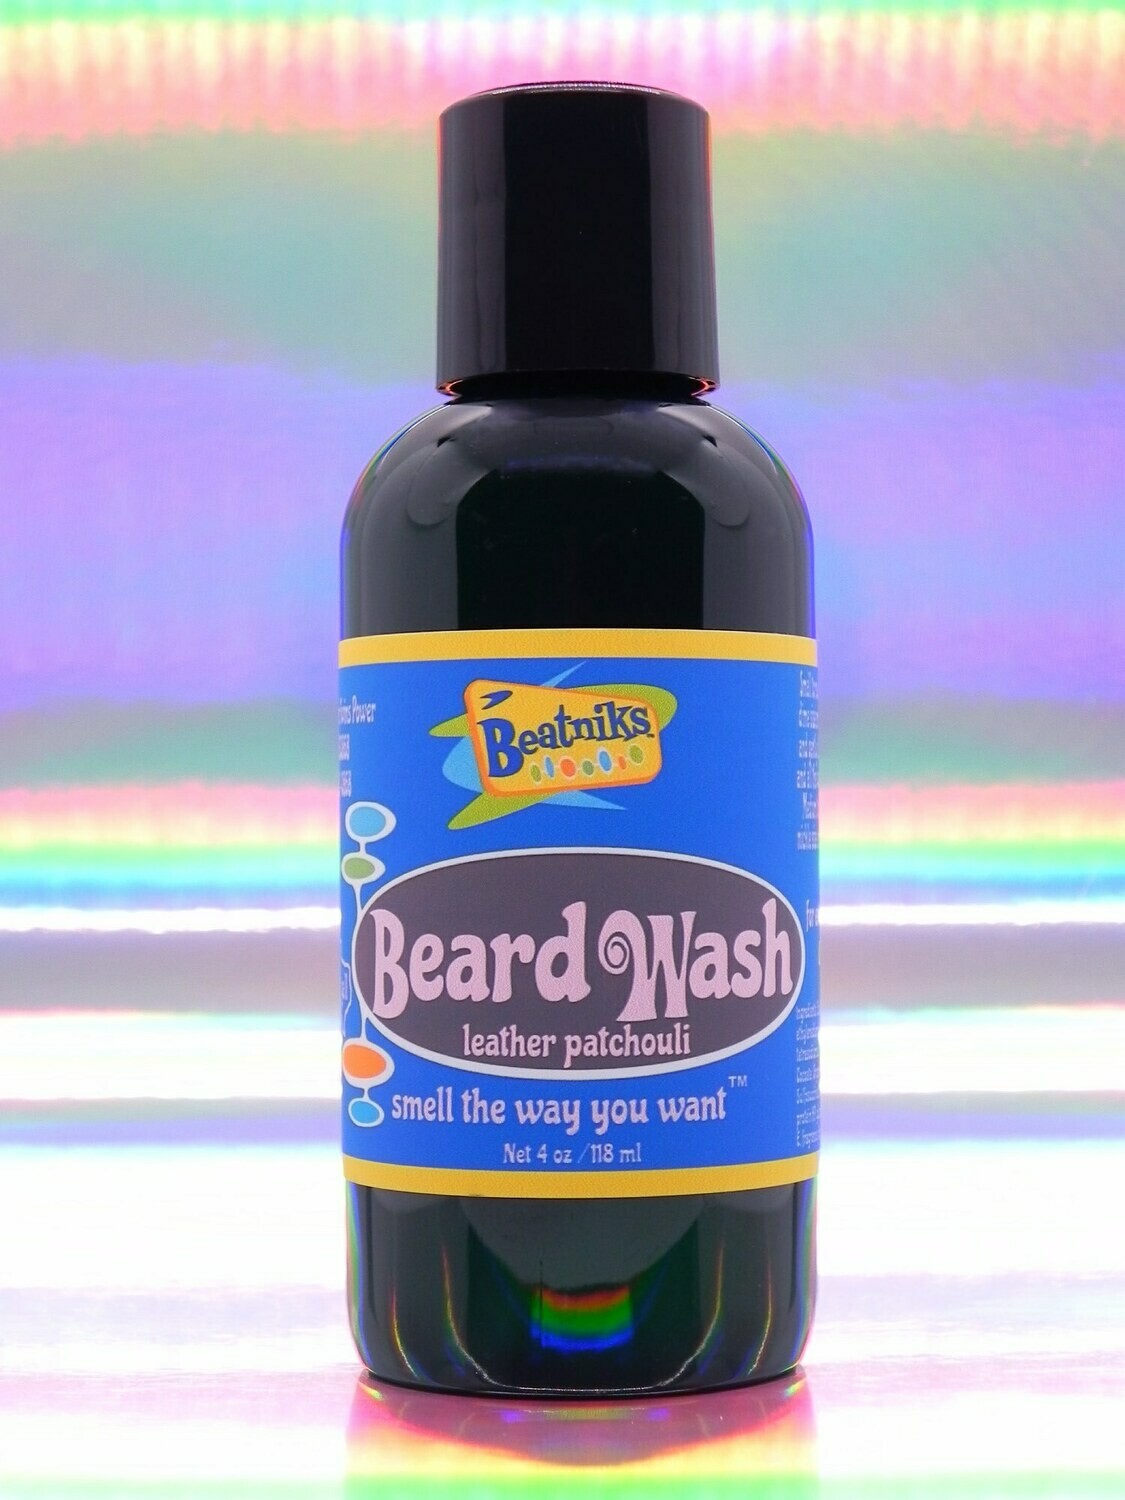 LEATHER PATCHOULI | Beard Wash